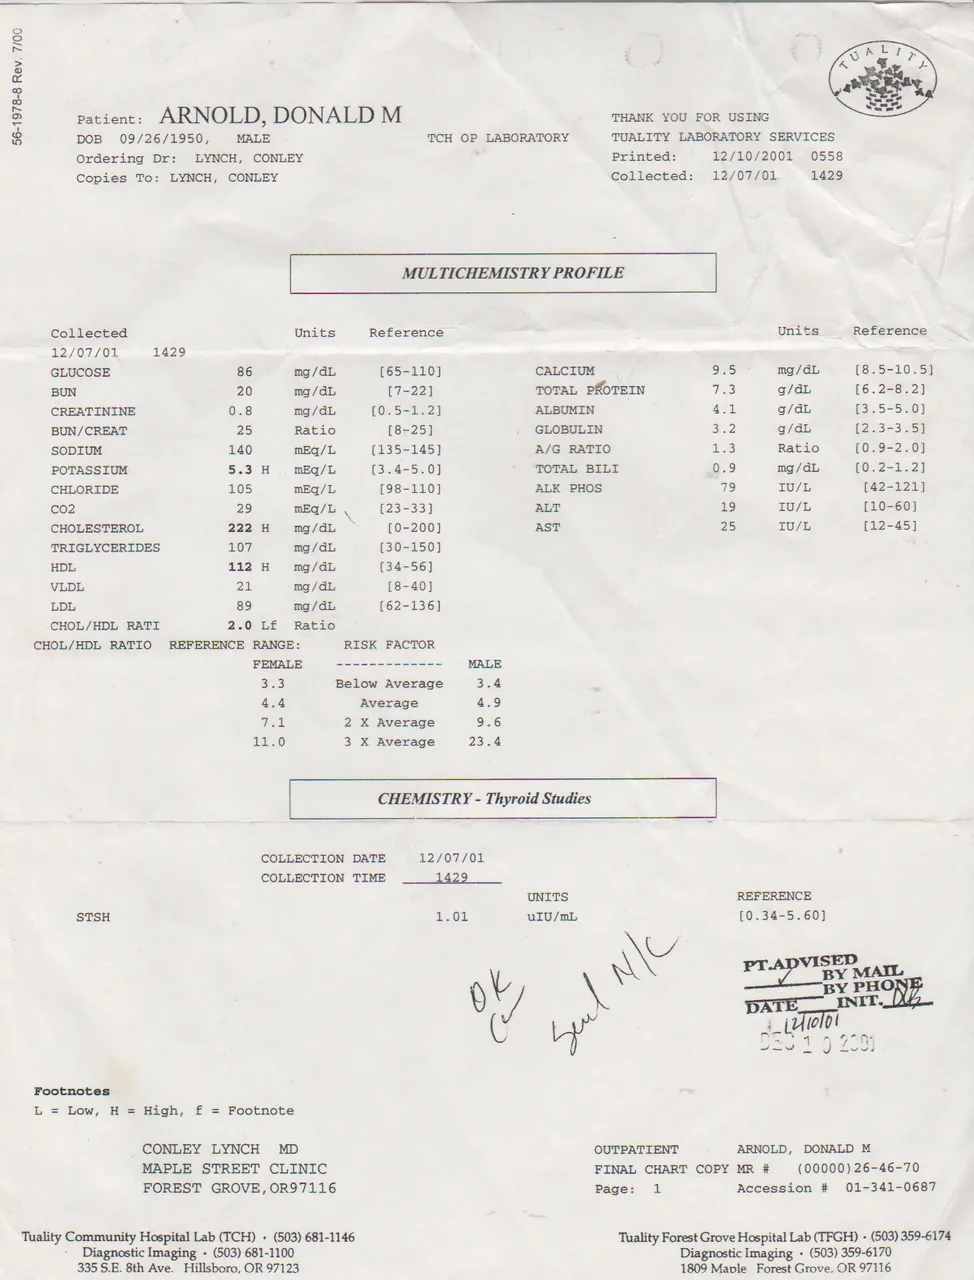 2001-12-07 - Friday - Don Arnold Multichemistry Profile - Doctor Visit, Health.png